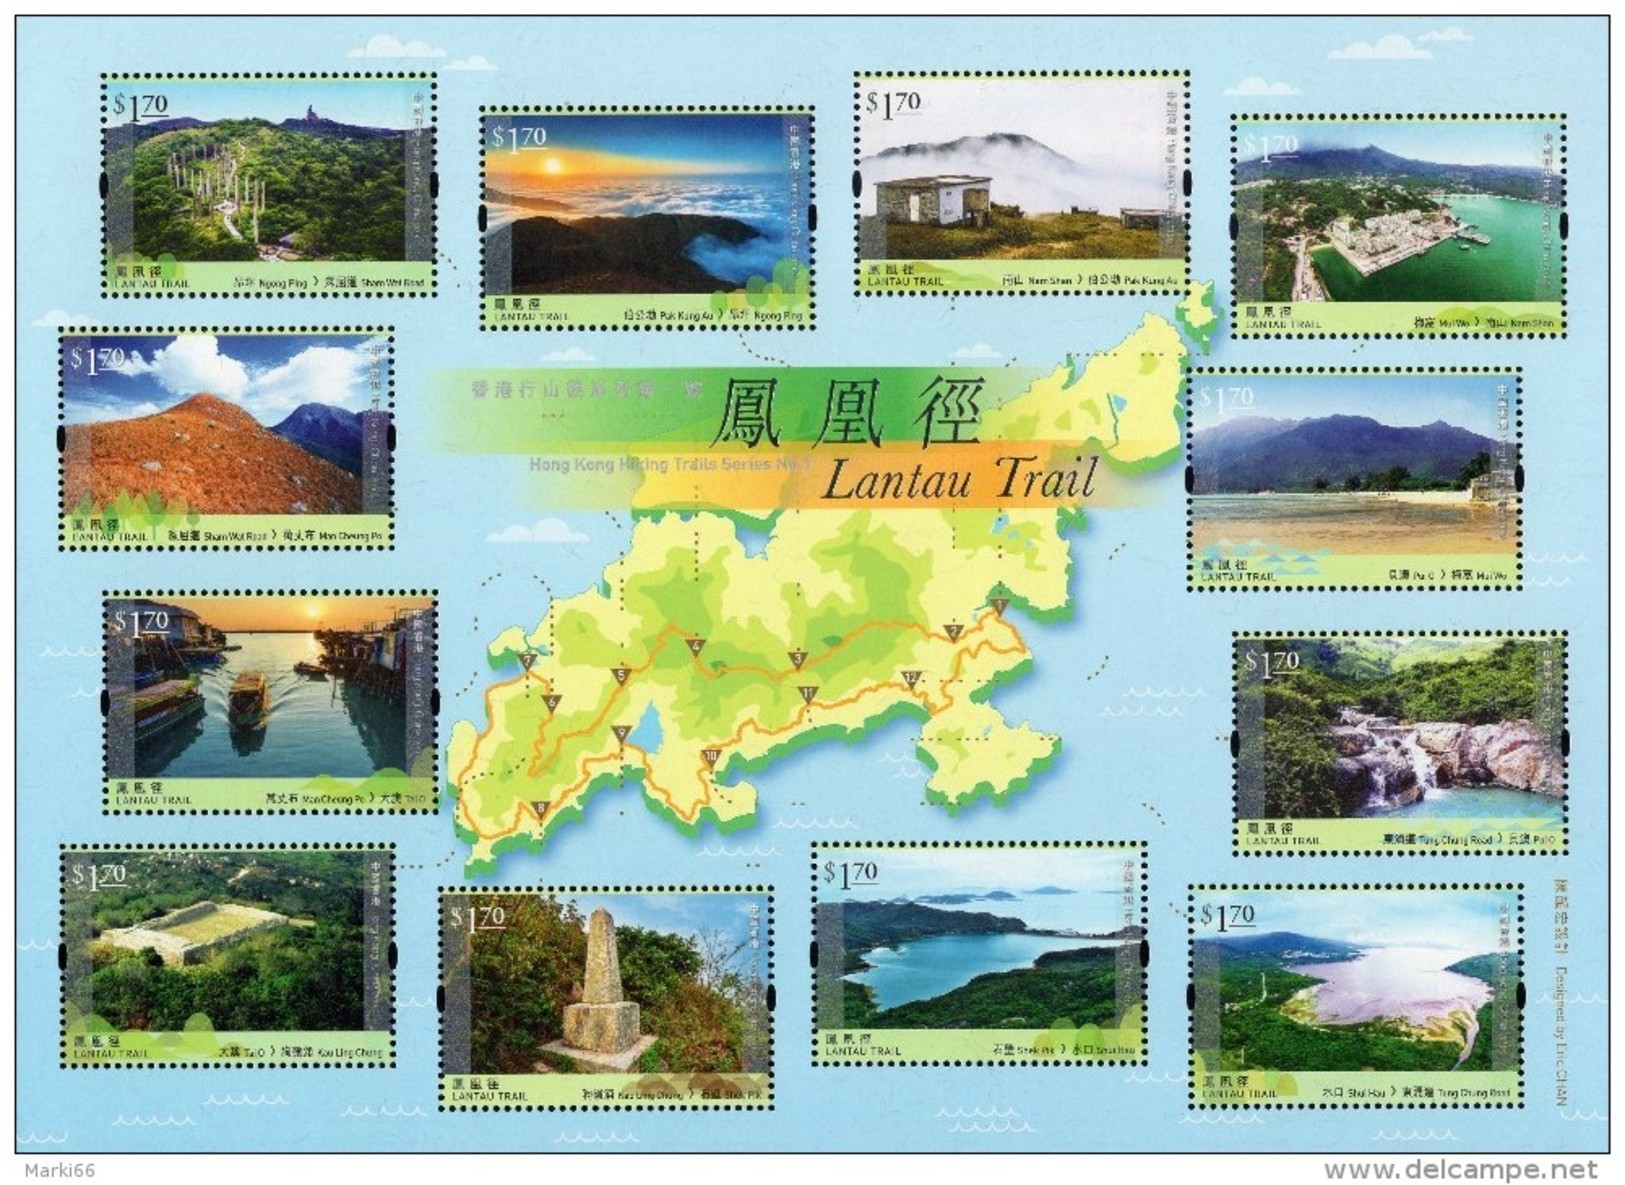 Hong Kong - 2016 - Hong Kong Hiking Trails, Series 1 - Lantau Trail - Mint Souvenir Sheet - Neufs